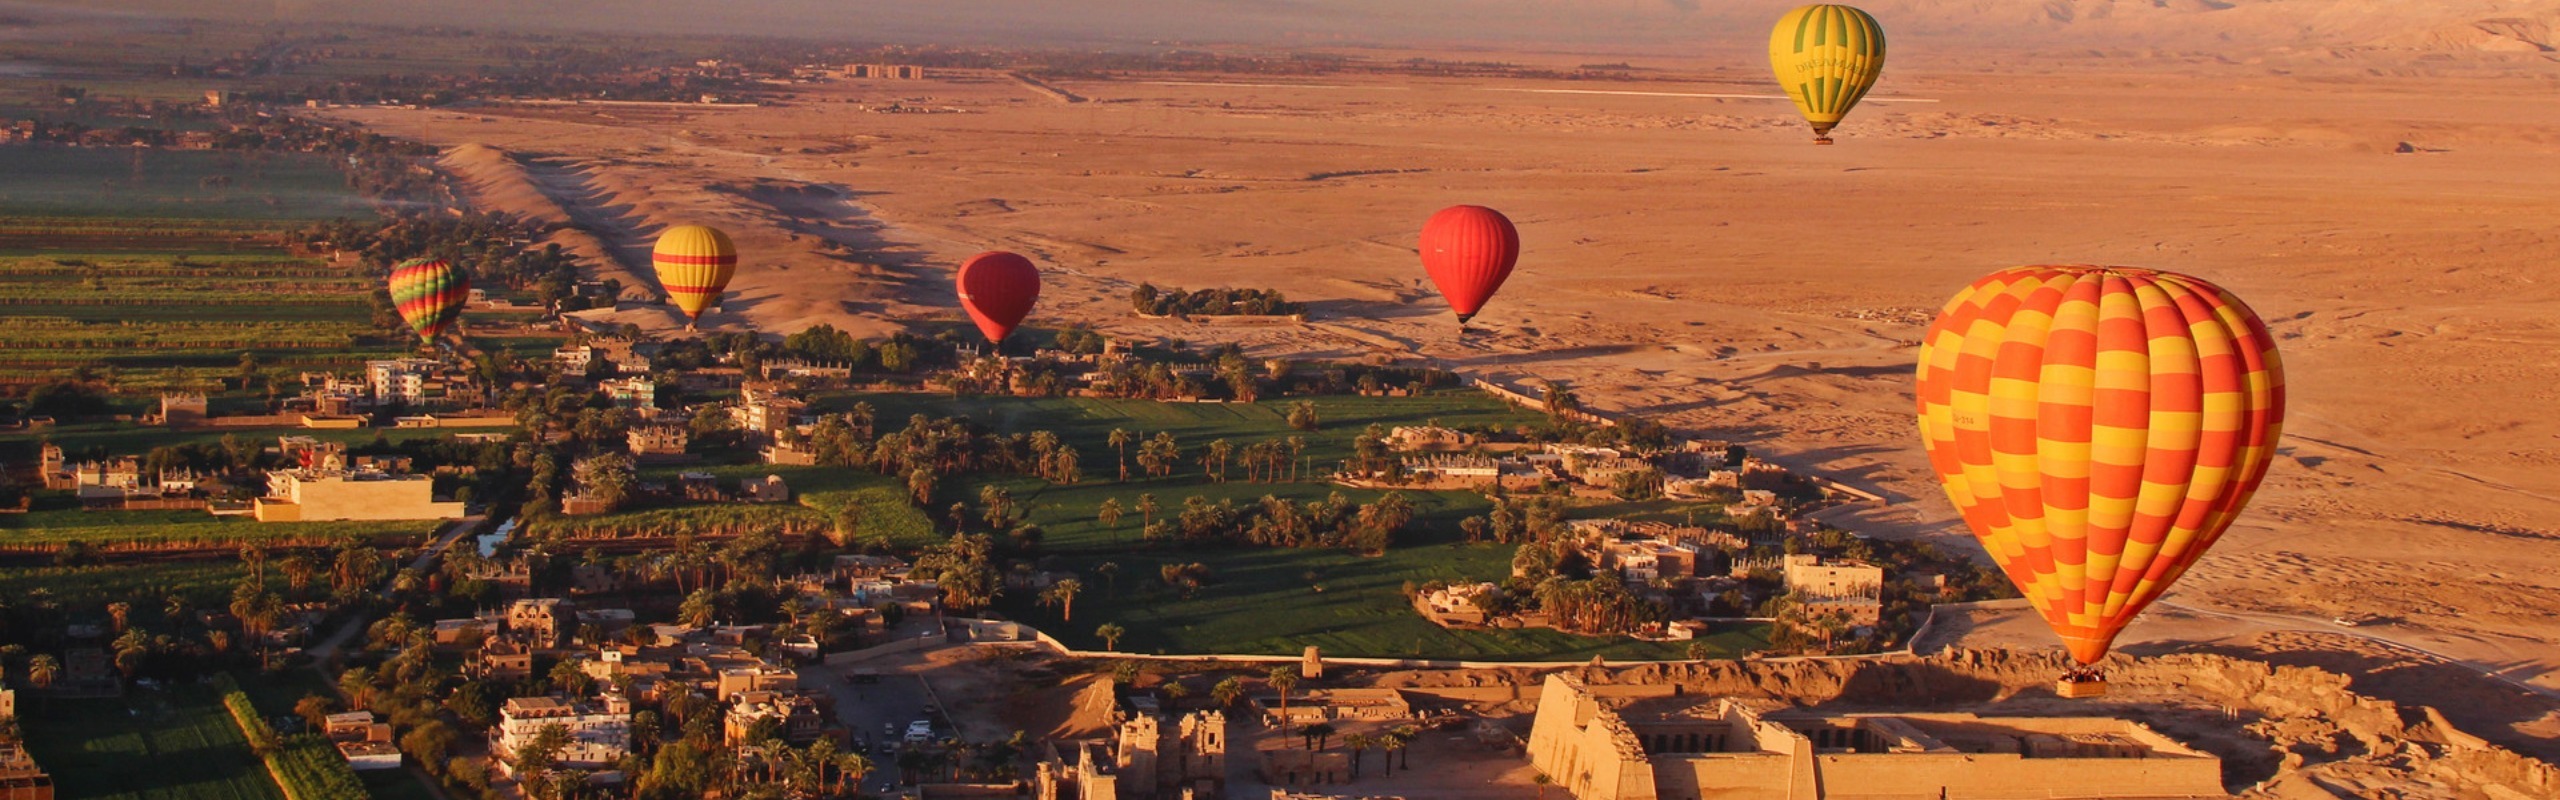 15 Top Egypt Travel Tips